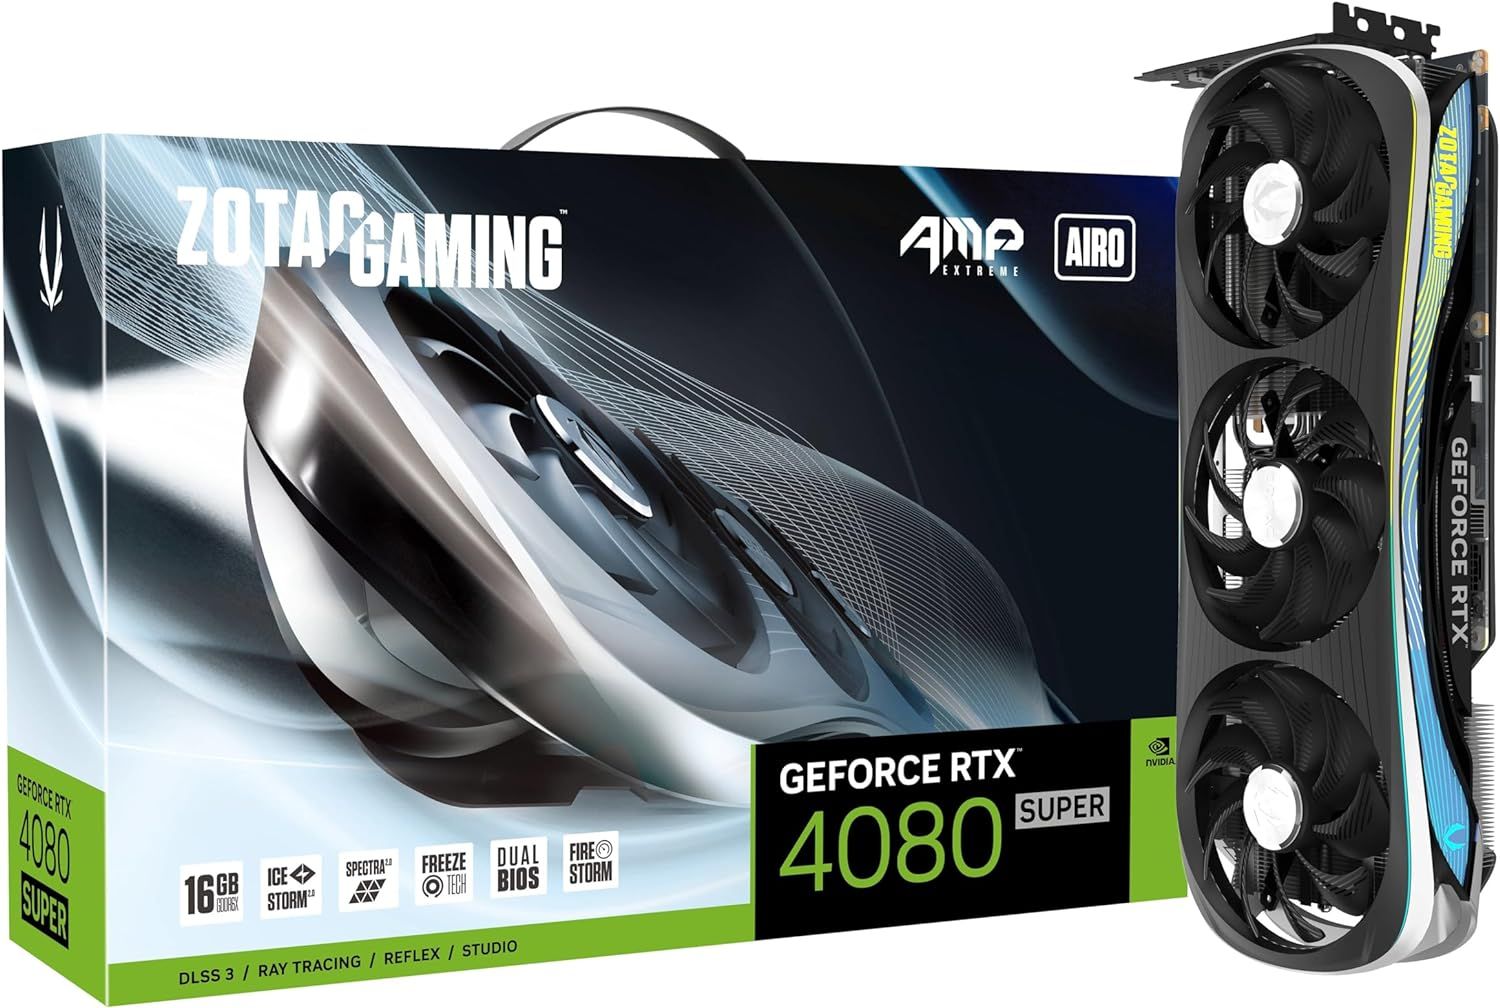 ZOTAC Gaming GeForce RTX 4080 Super AMP